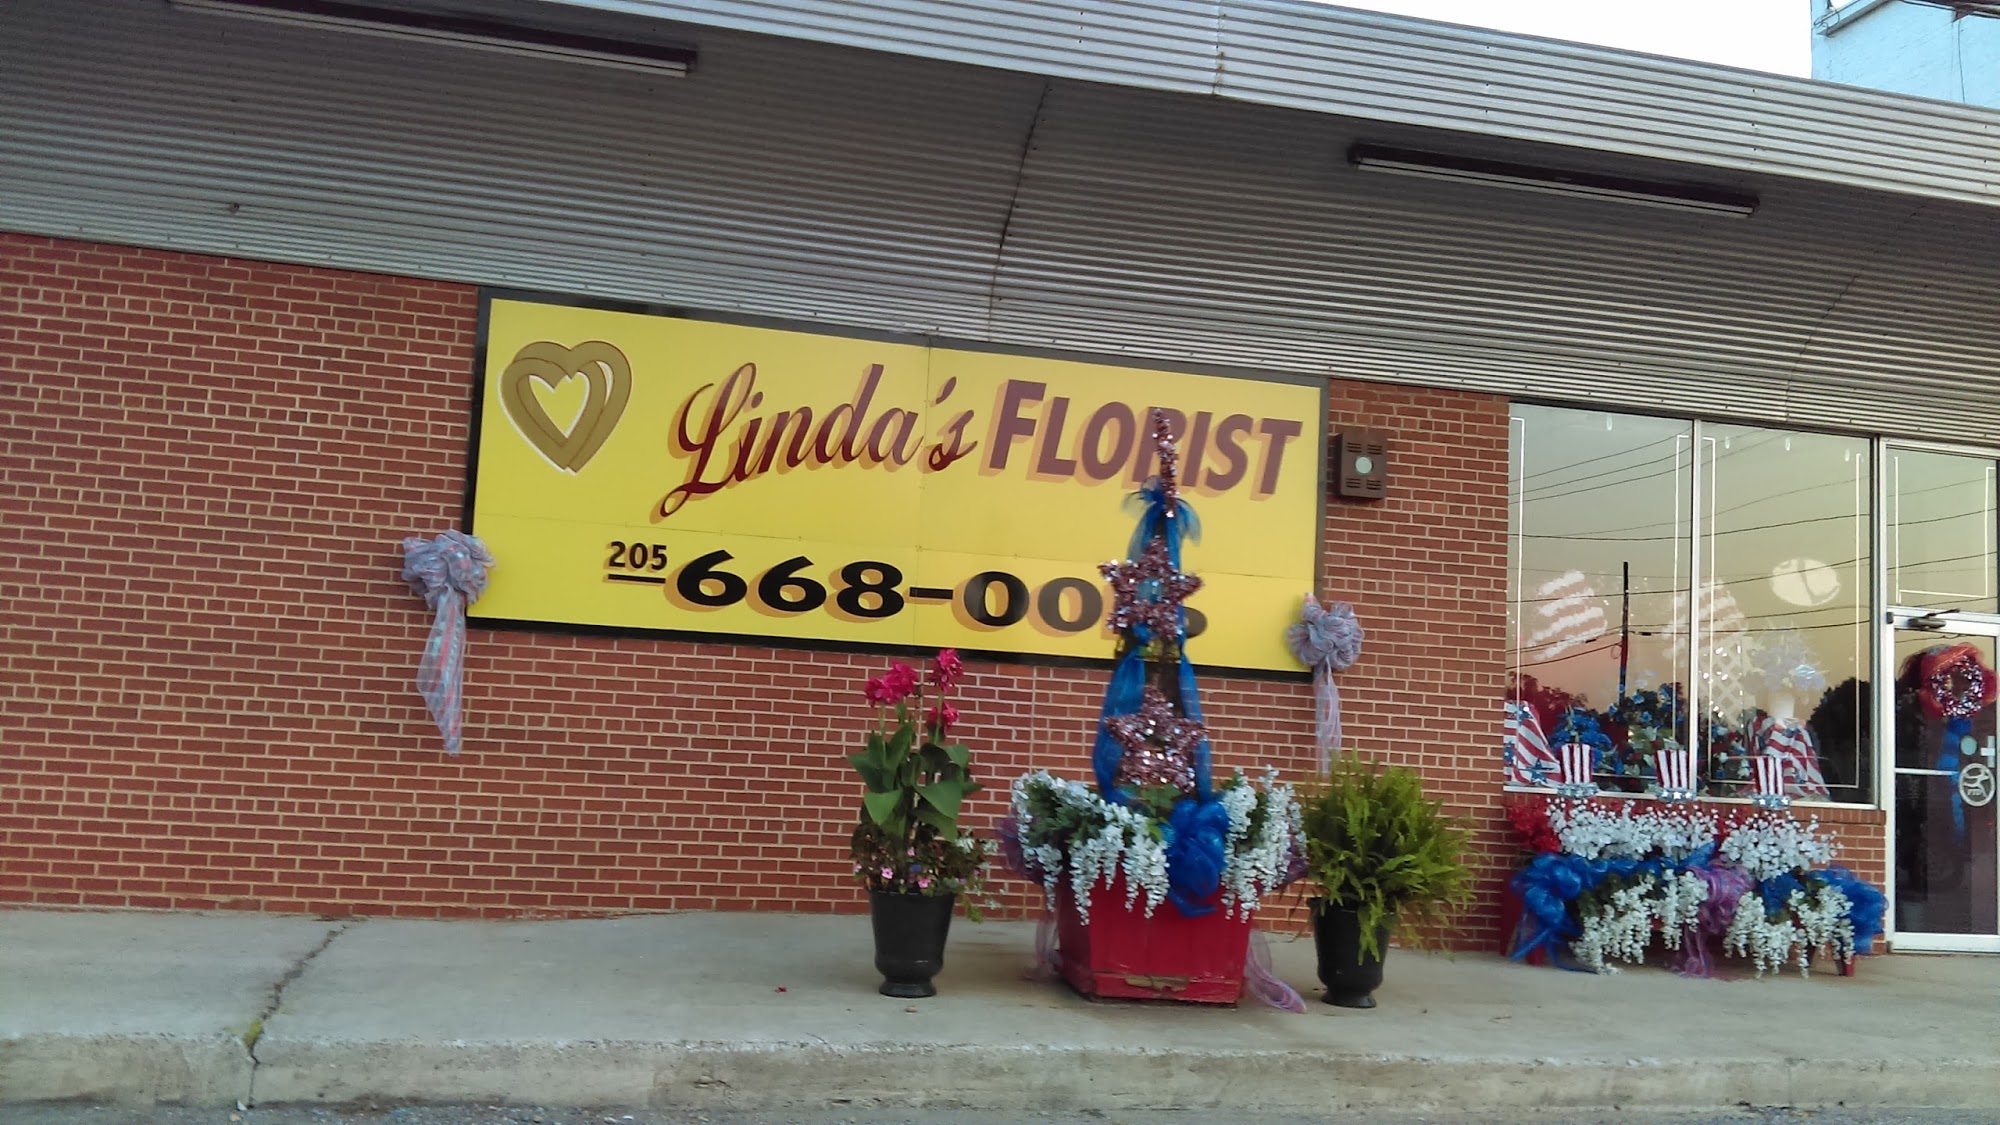 Linda's Florist